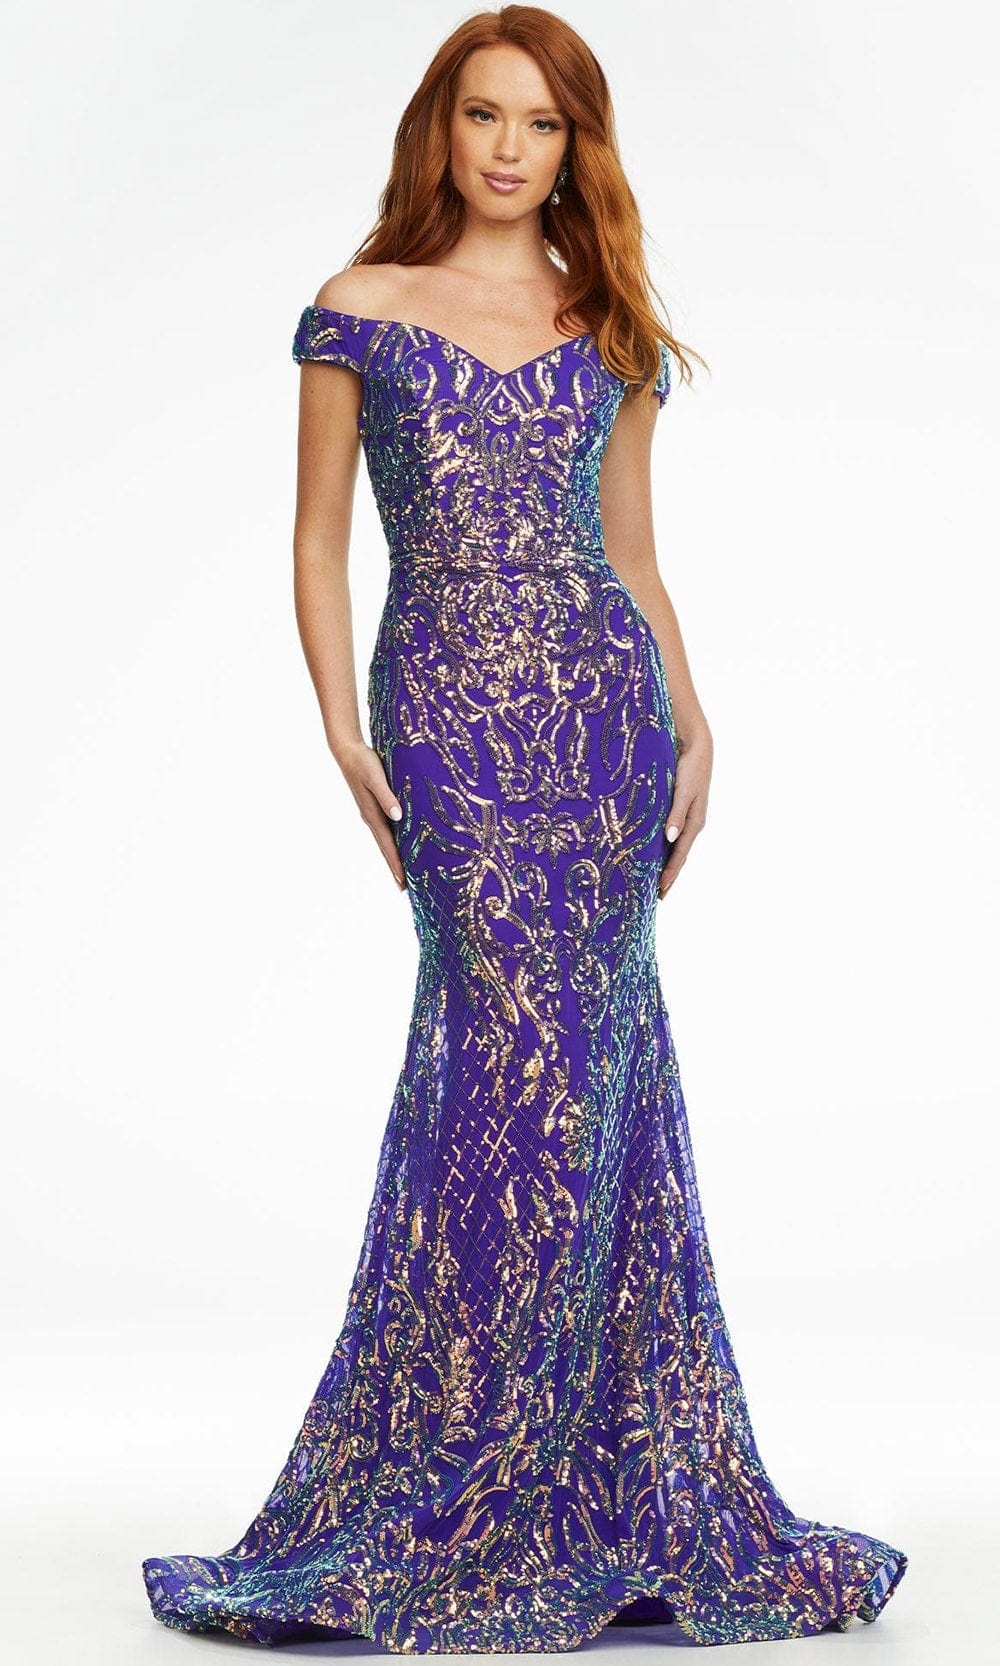 Ashley Lauren - 11115 Intricate Sequin Gown Prom Dresses 0 / Iridescent Purple